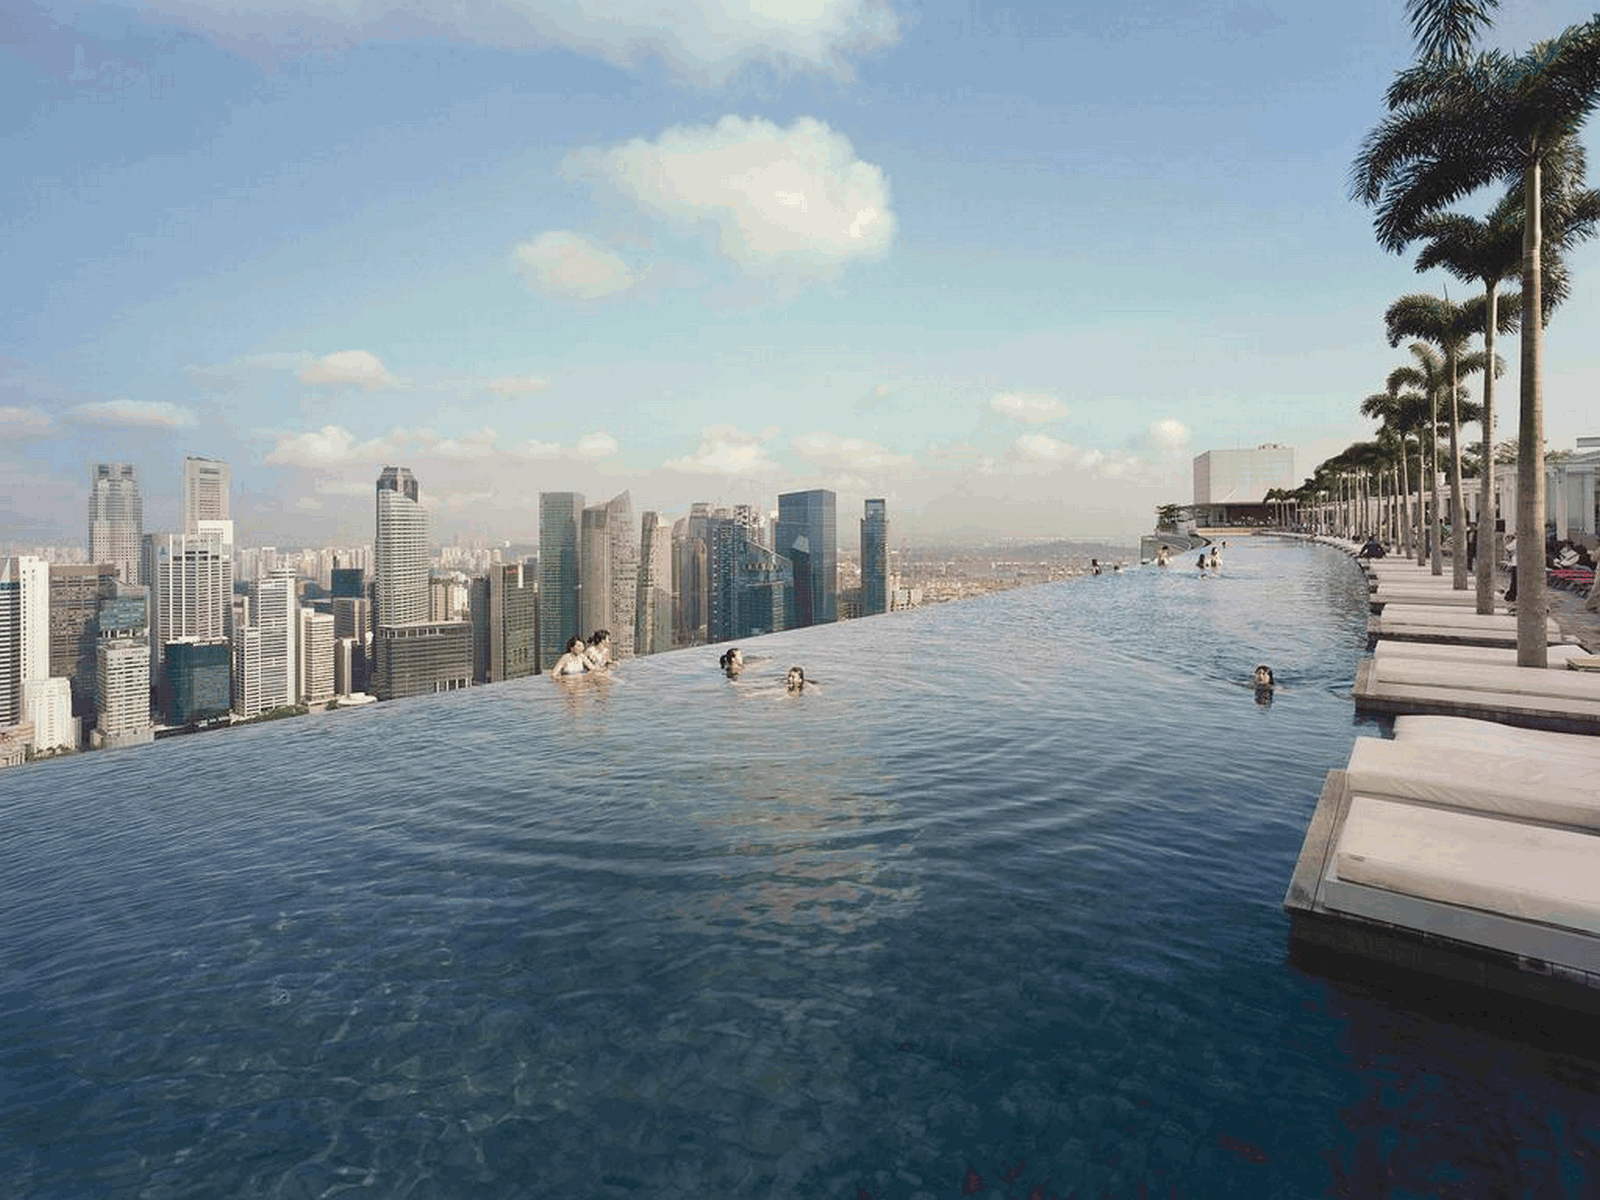 Marina Bay Sands hotels and resort Singapore 2